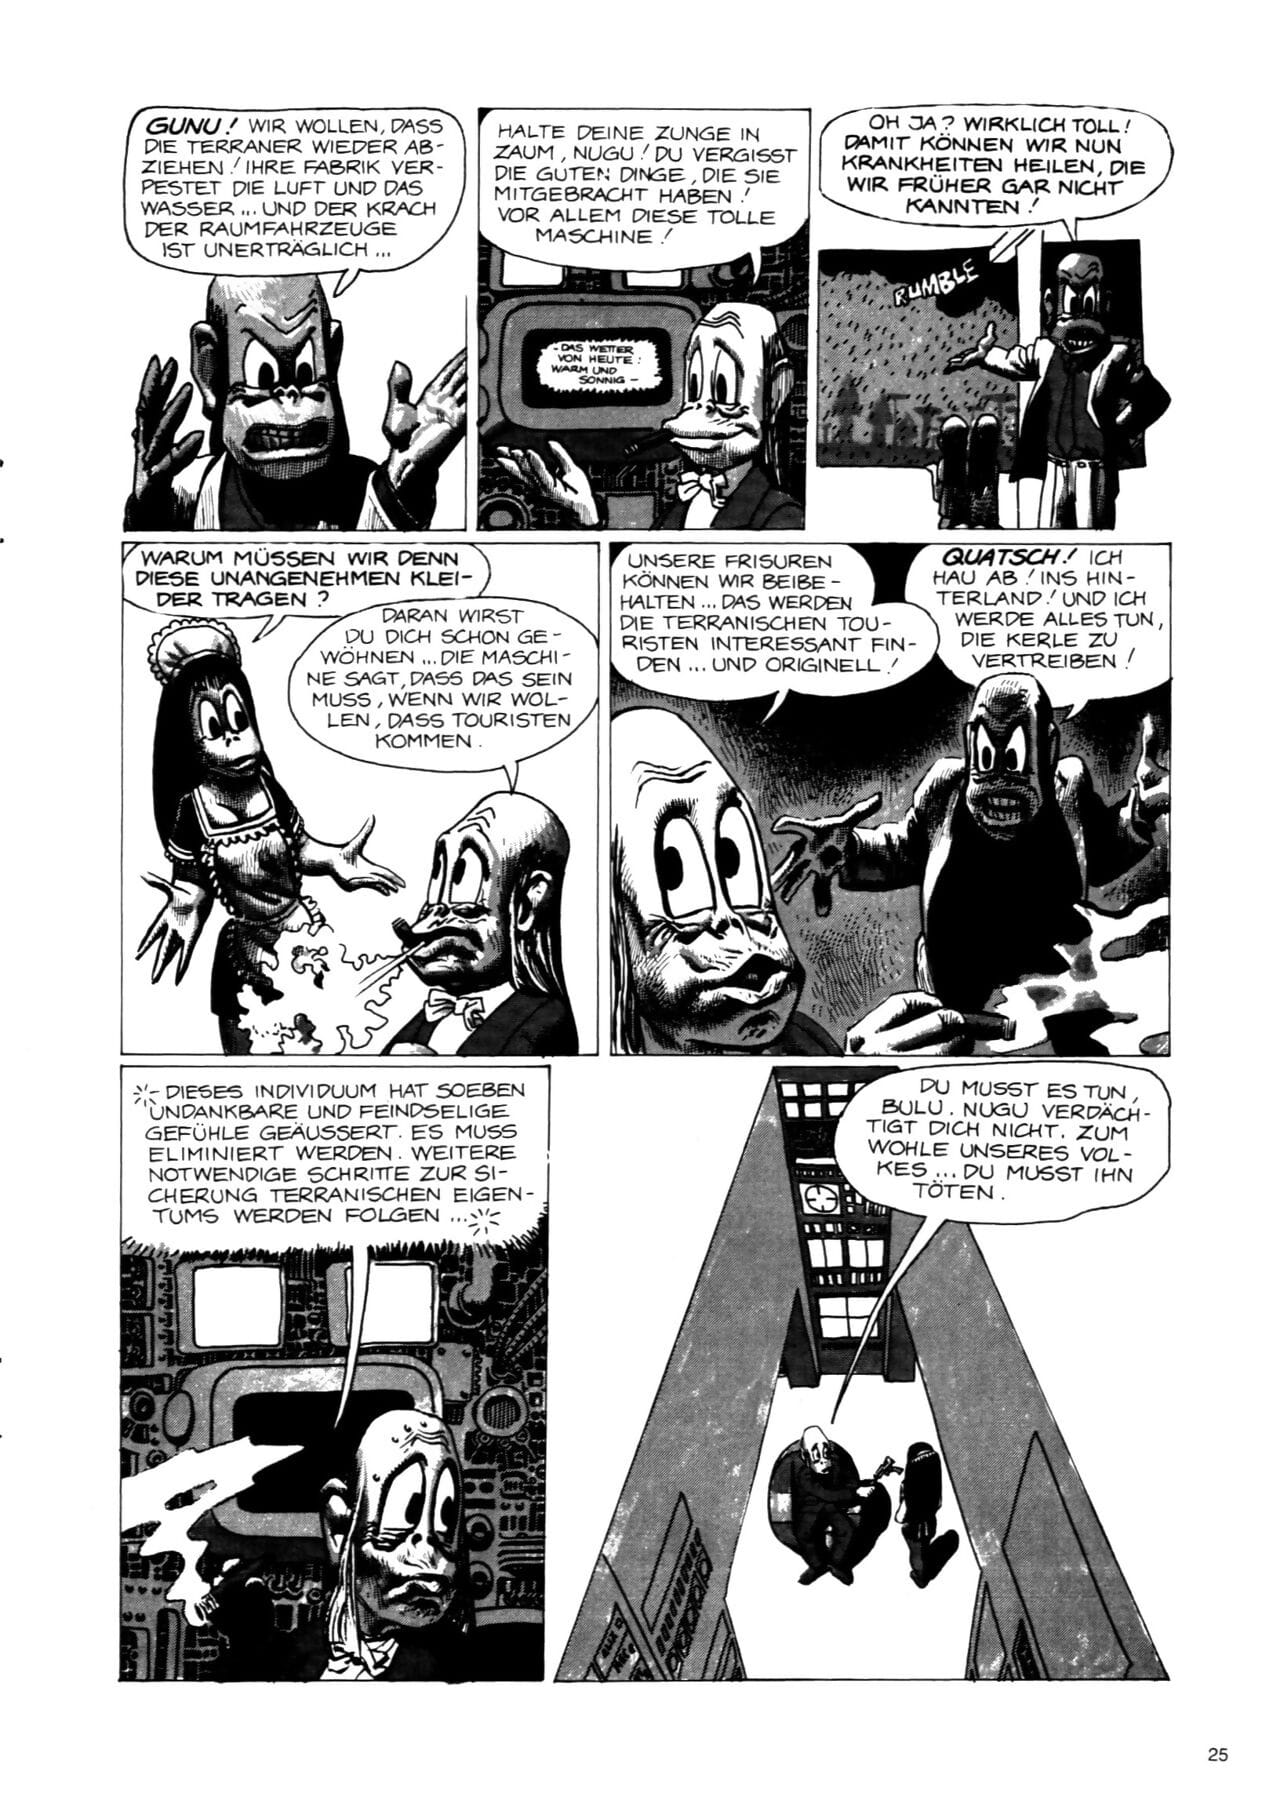 schwermetall #054 page 1